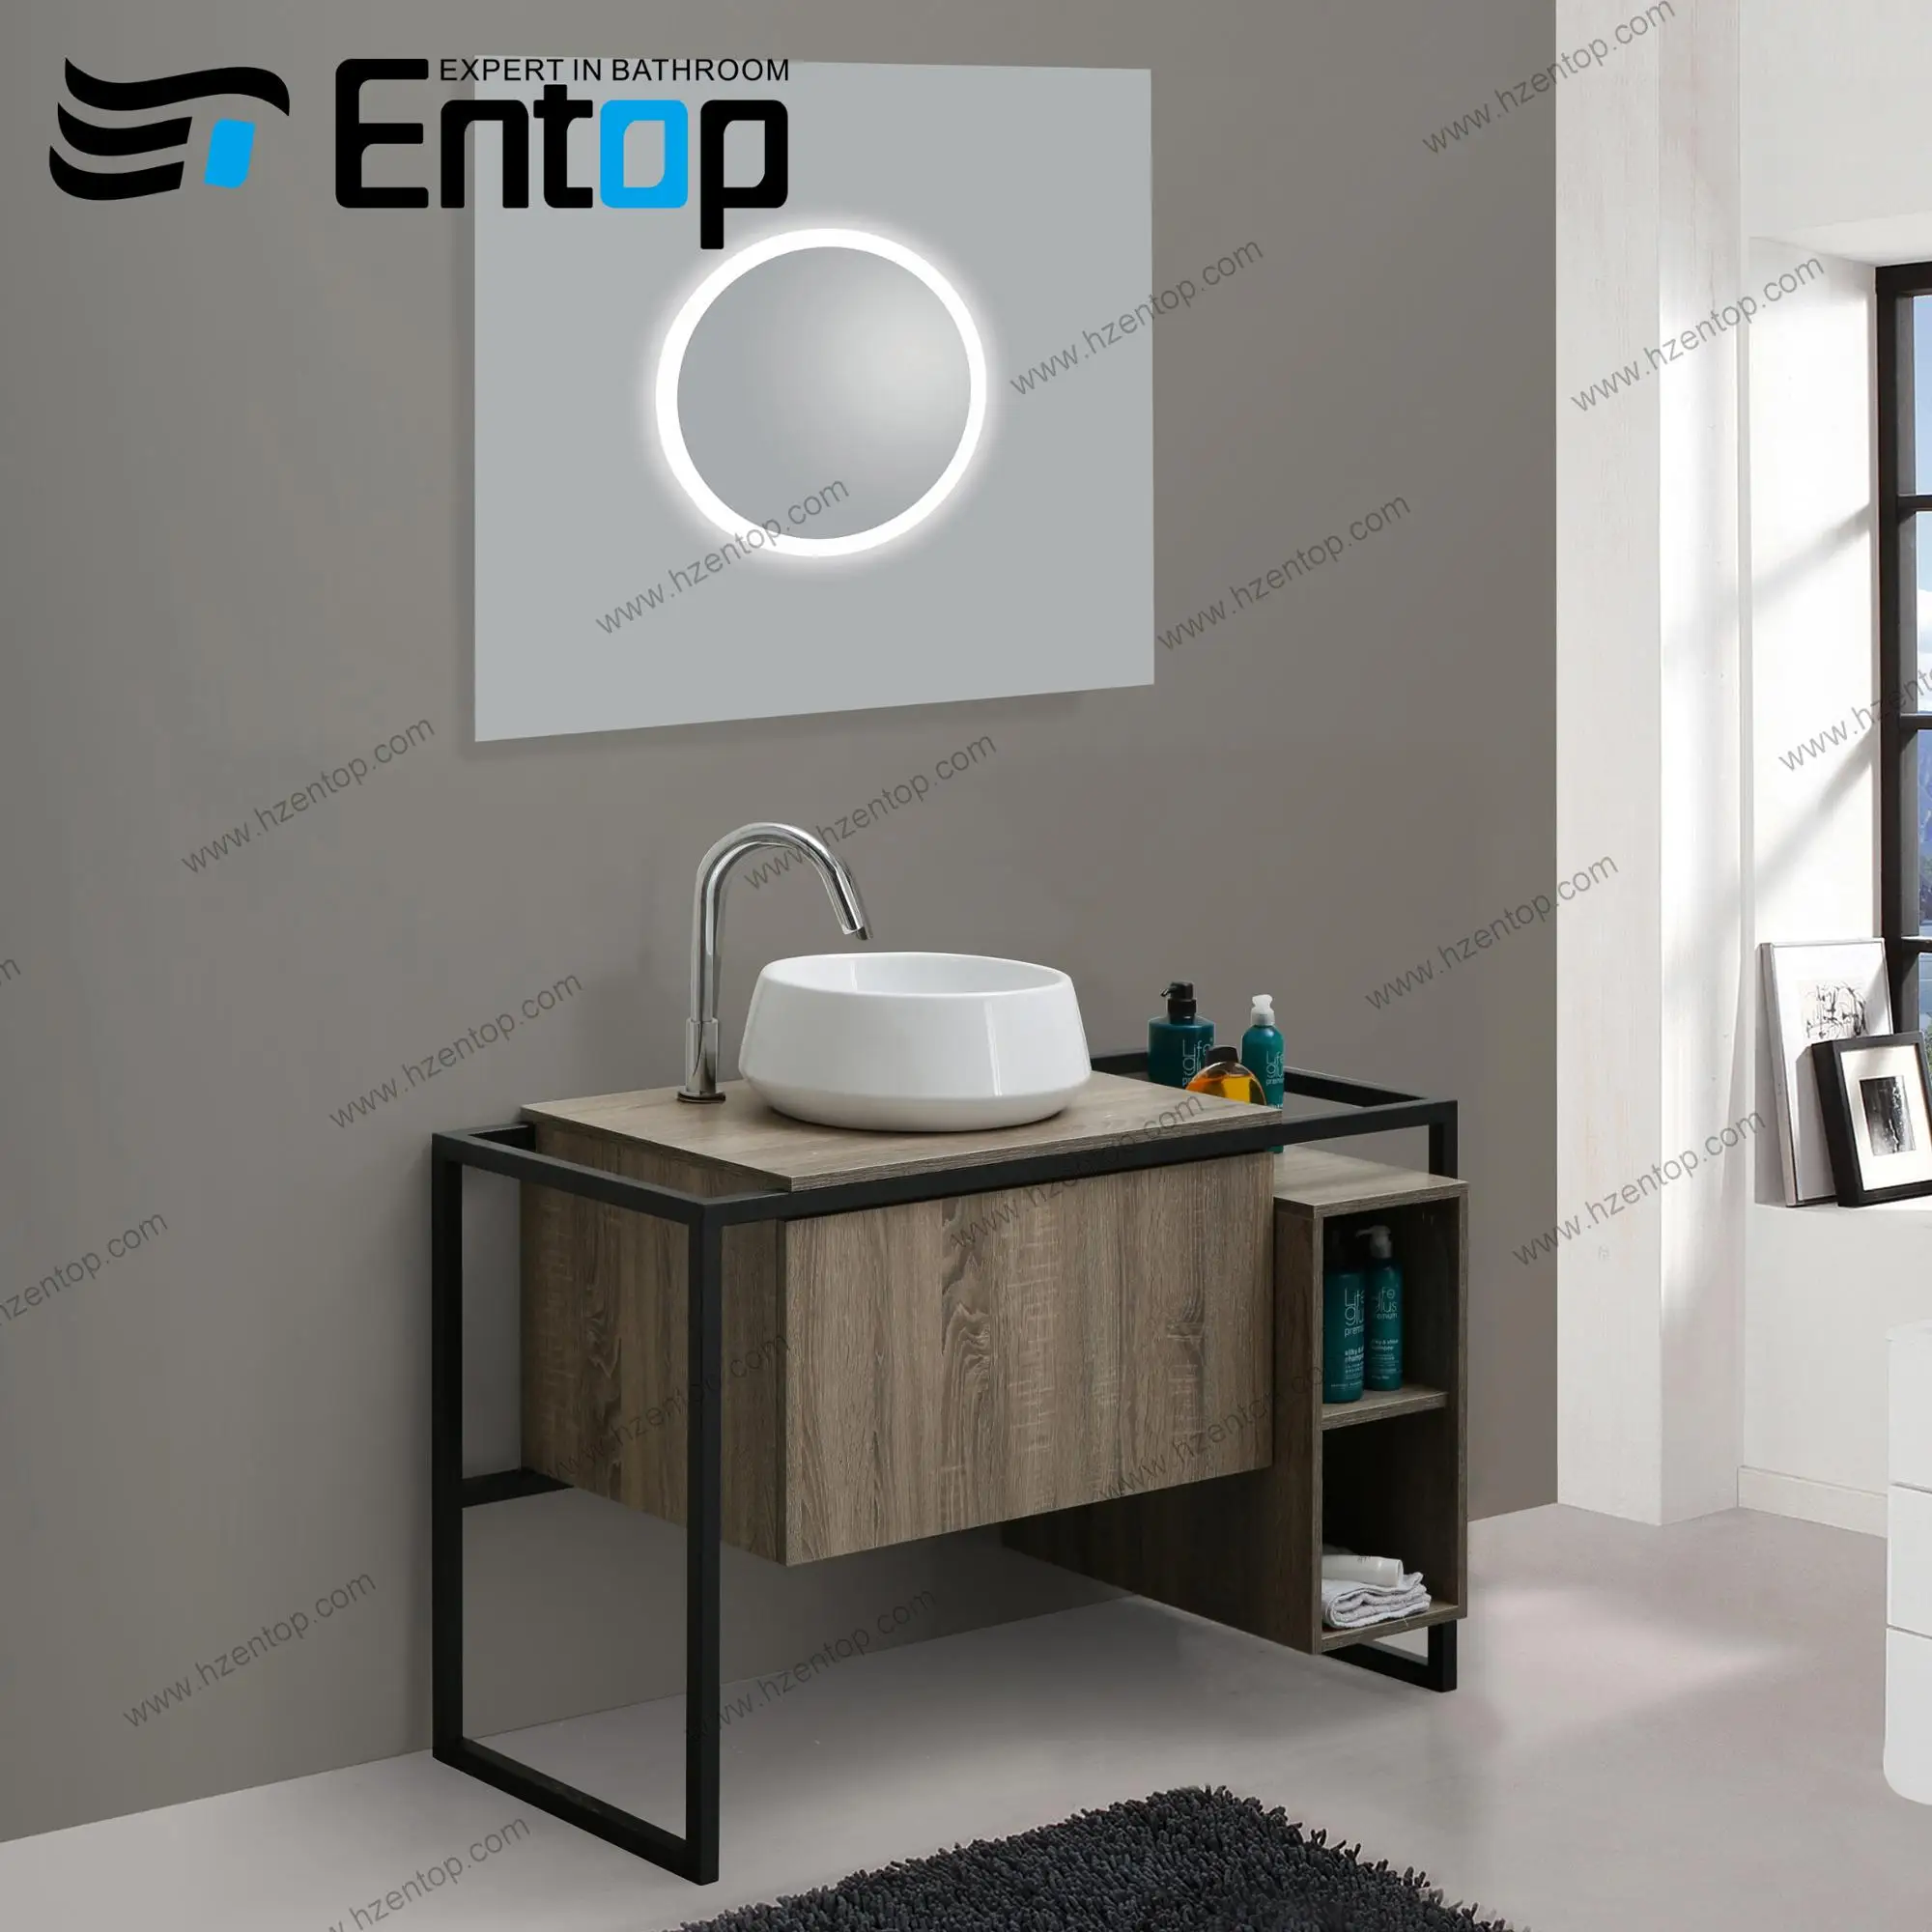 Entop Mdf Modern Bathroom Vanities Furniture American Style Other For Hotel Designed Bathroom Cabinet Buy Bathroom Cabinet